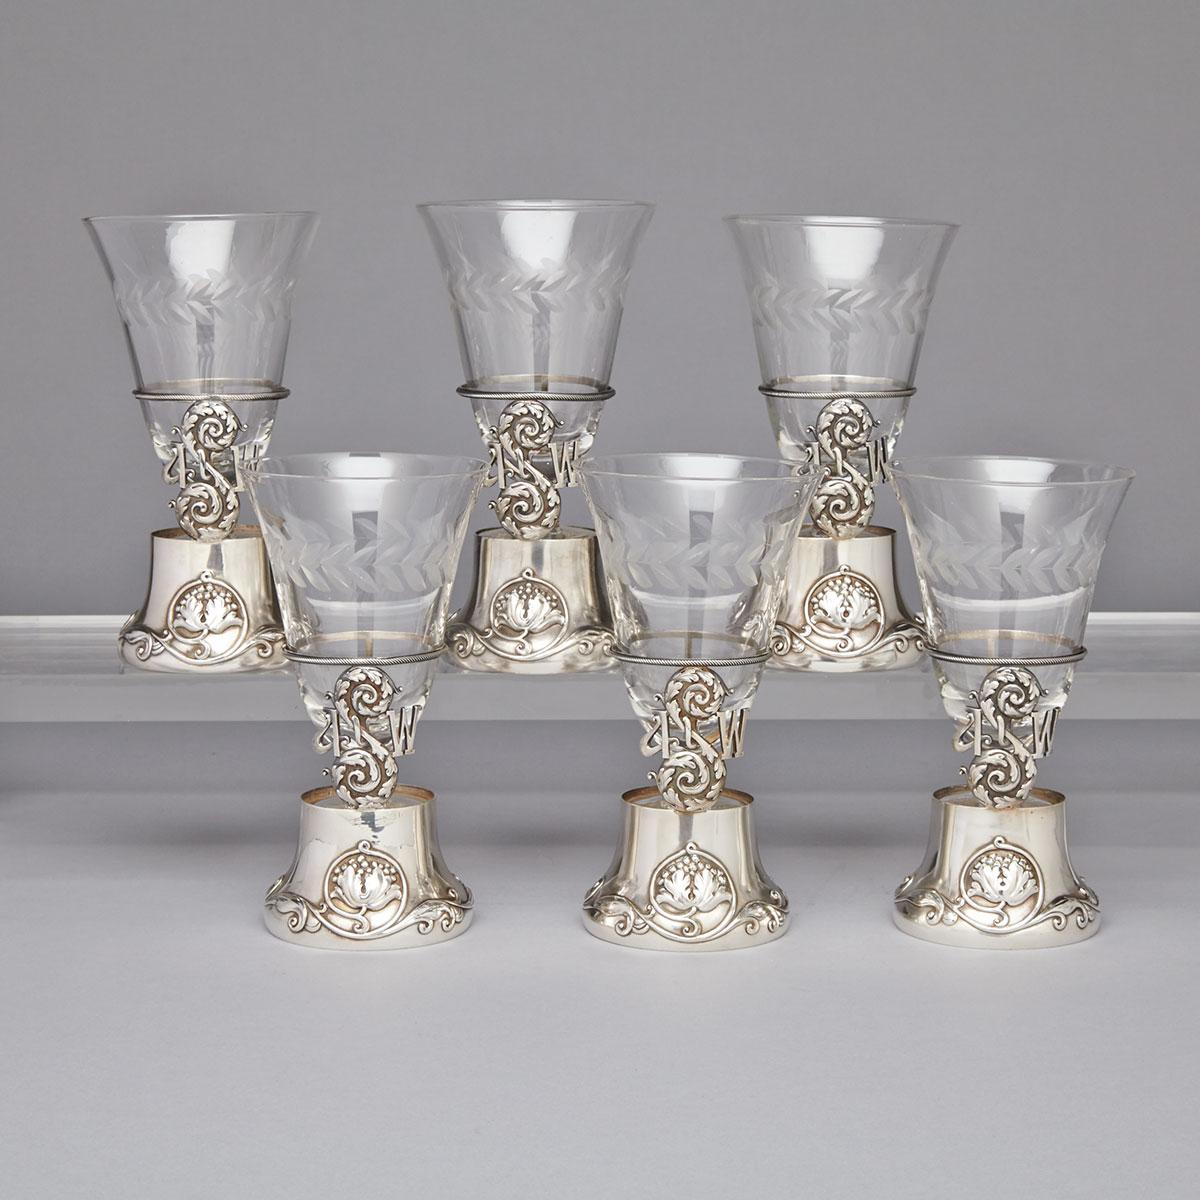 Six Russian Silver Tea Glass Frames, Orest Kurlyukov, Moscow, c.1908-17